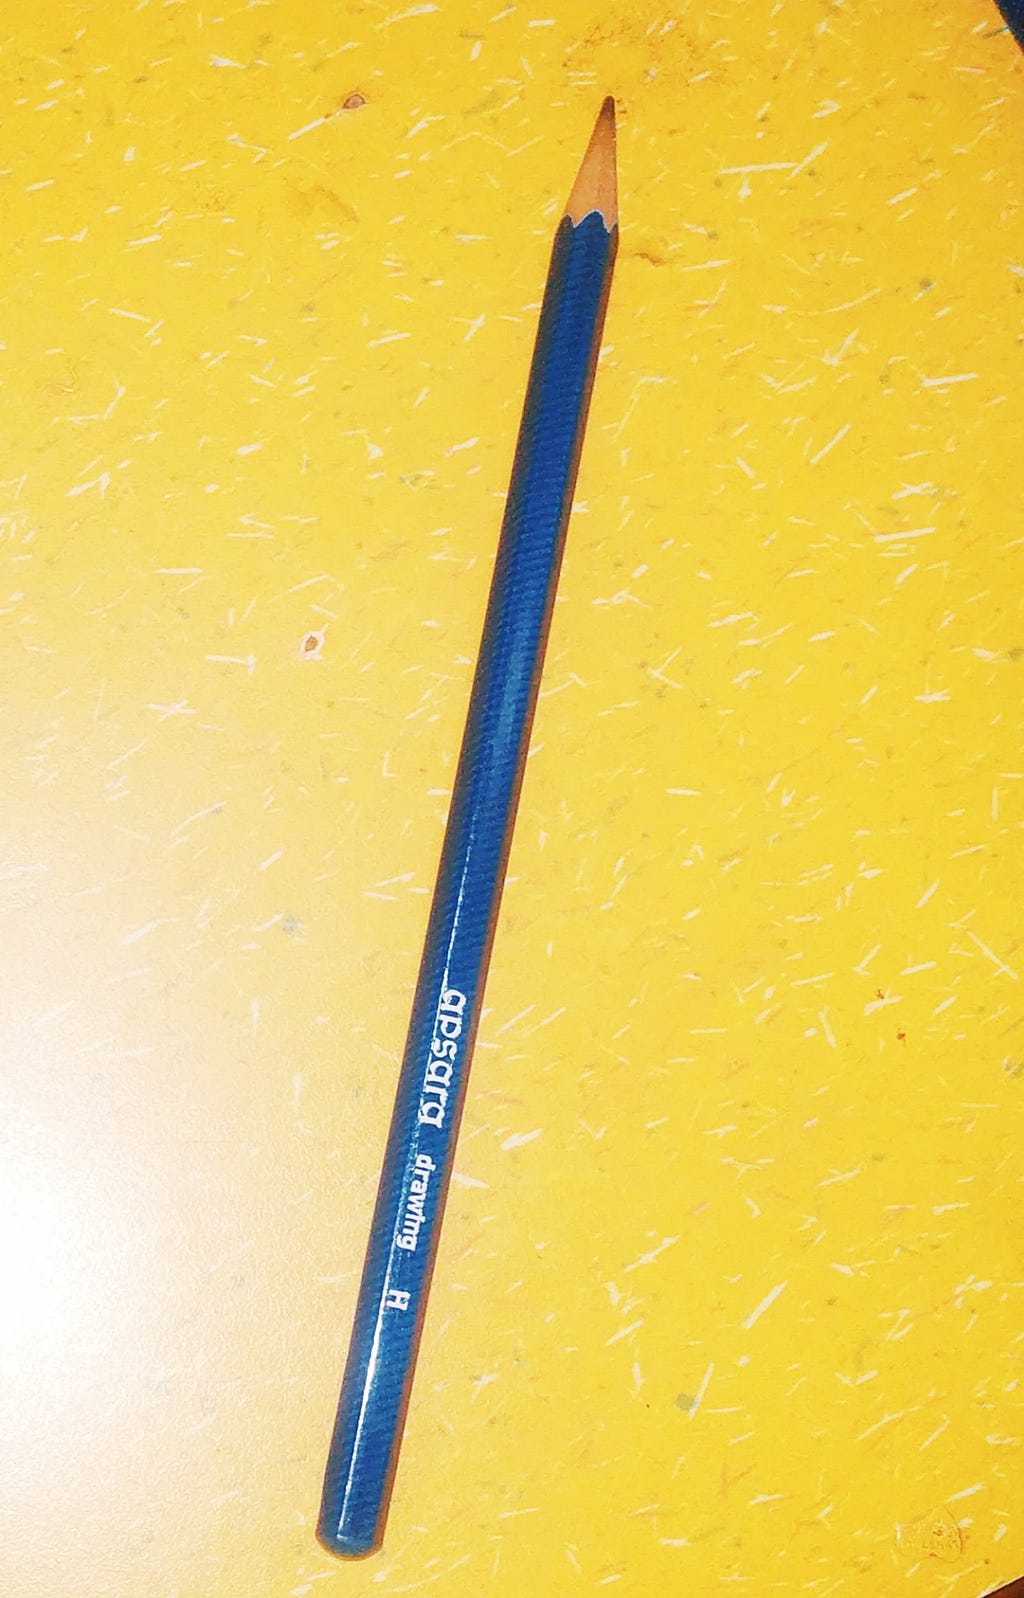 Photograph of Pencil.